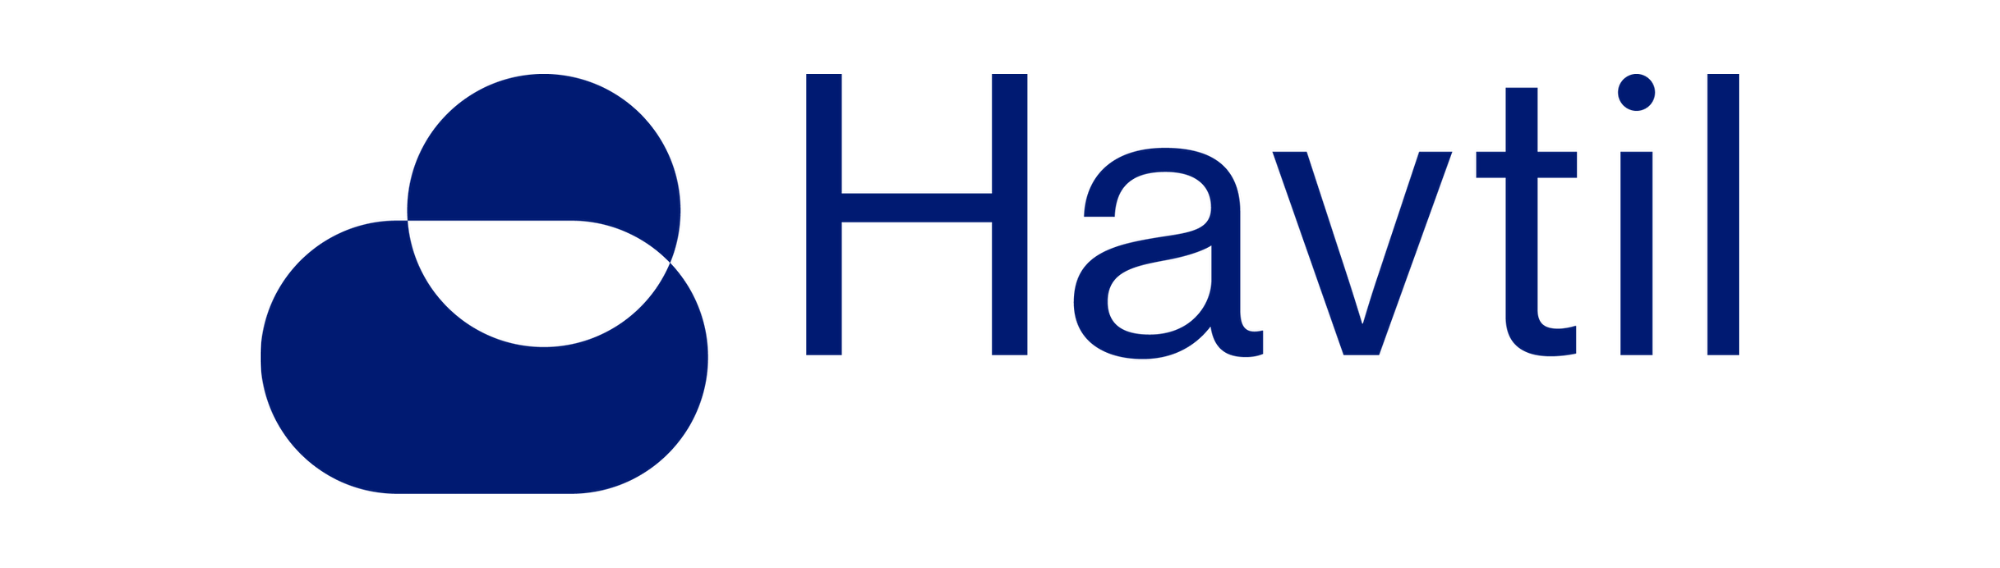 Logo havtil blaa